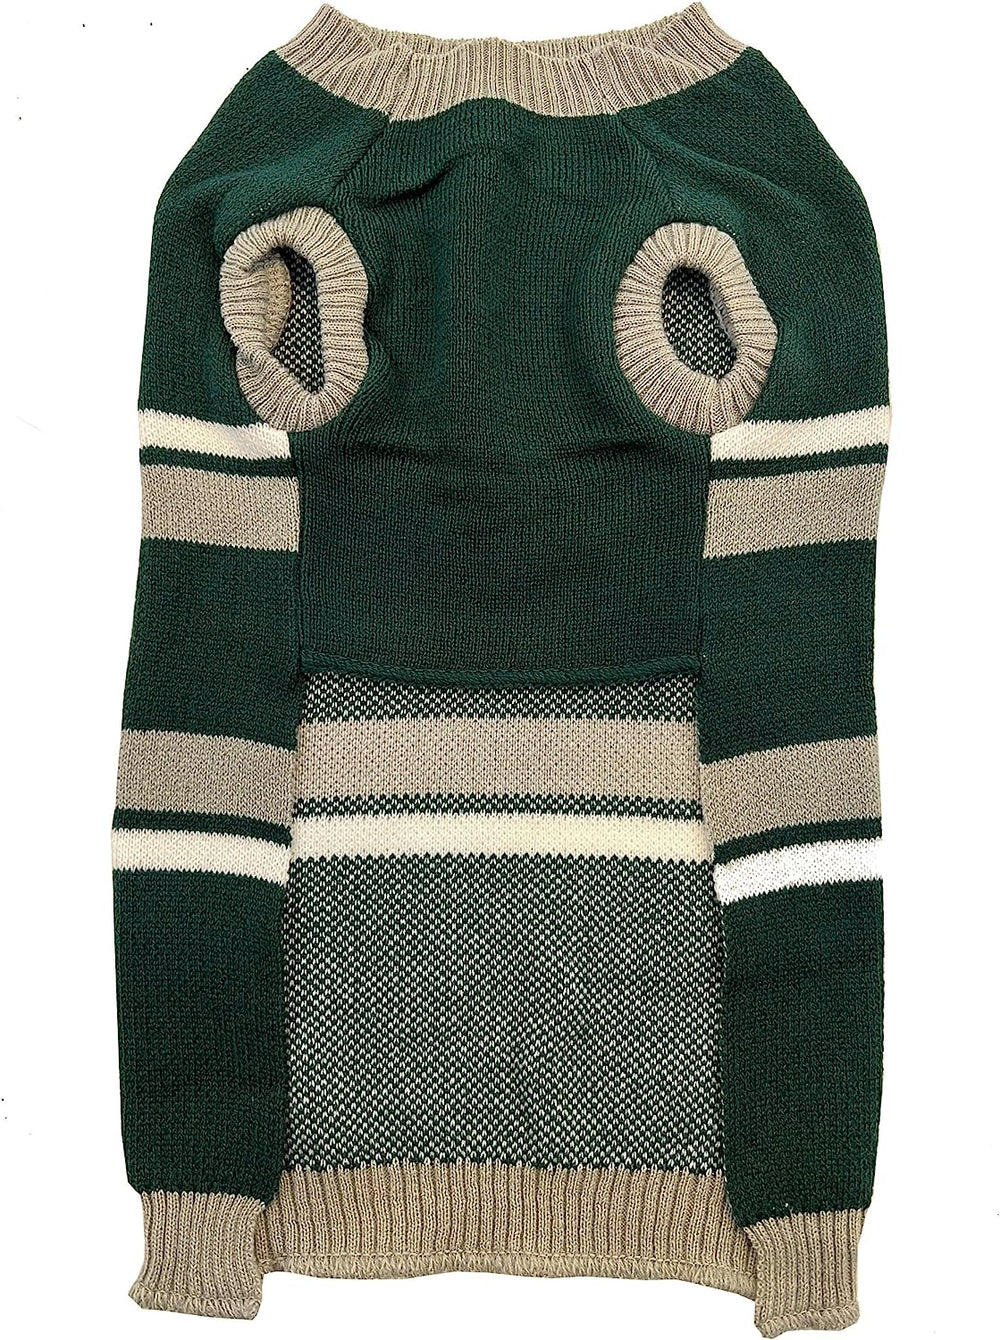 Philadelphia Eagles Pet Sweater